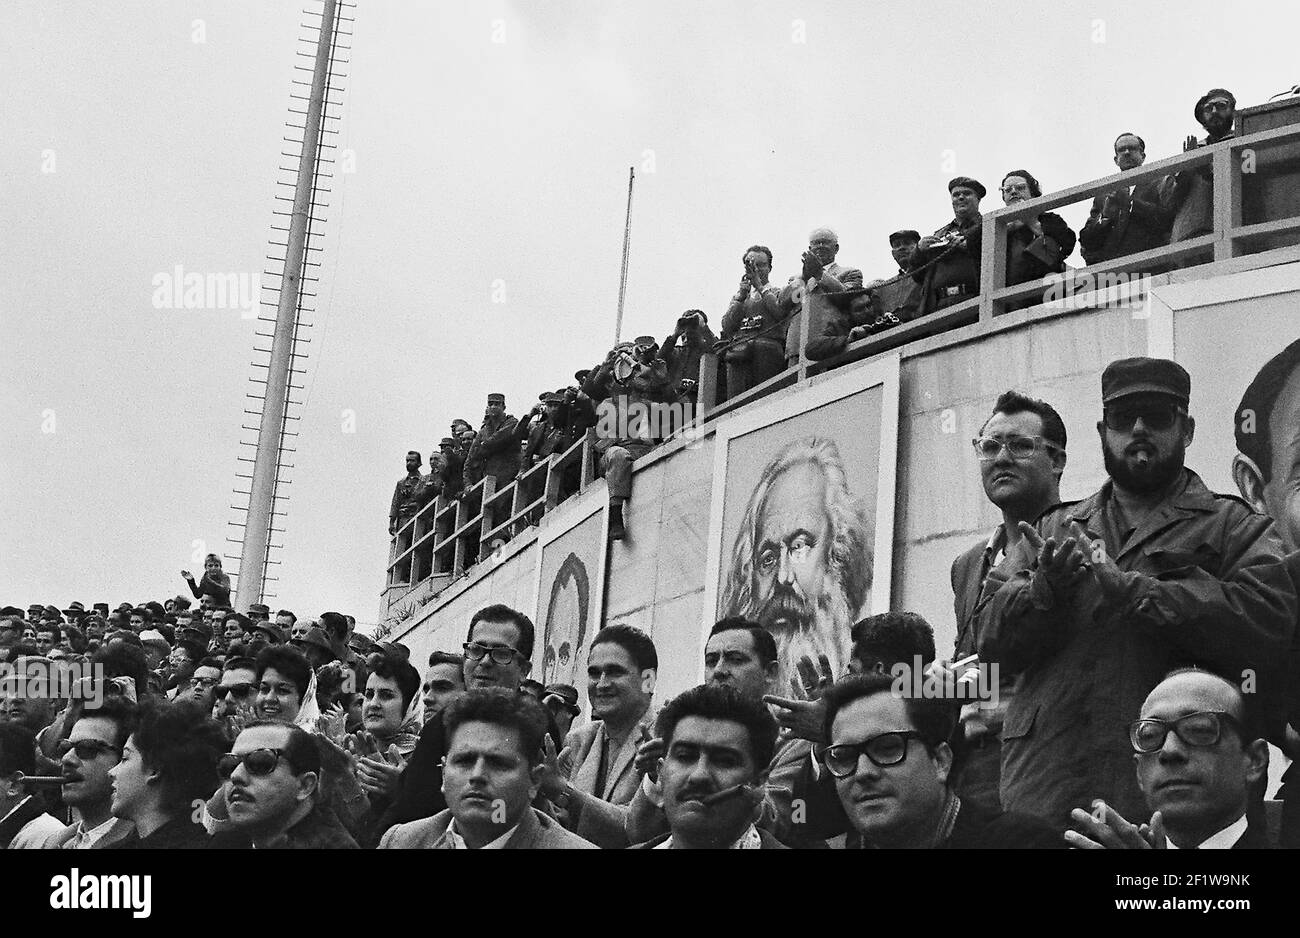 Speaker's podium, military parade, Havana (Cuba : Province), Havana (Cuba), Cuba, 1963. From the Deena Stryker photographs collection. () Stock Photo